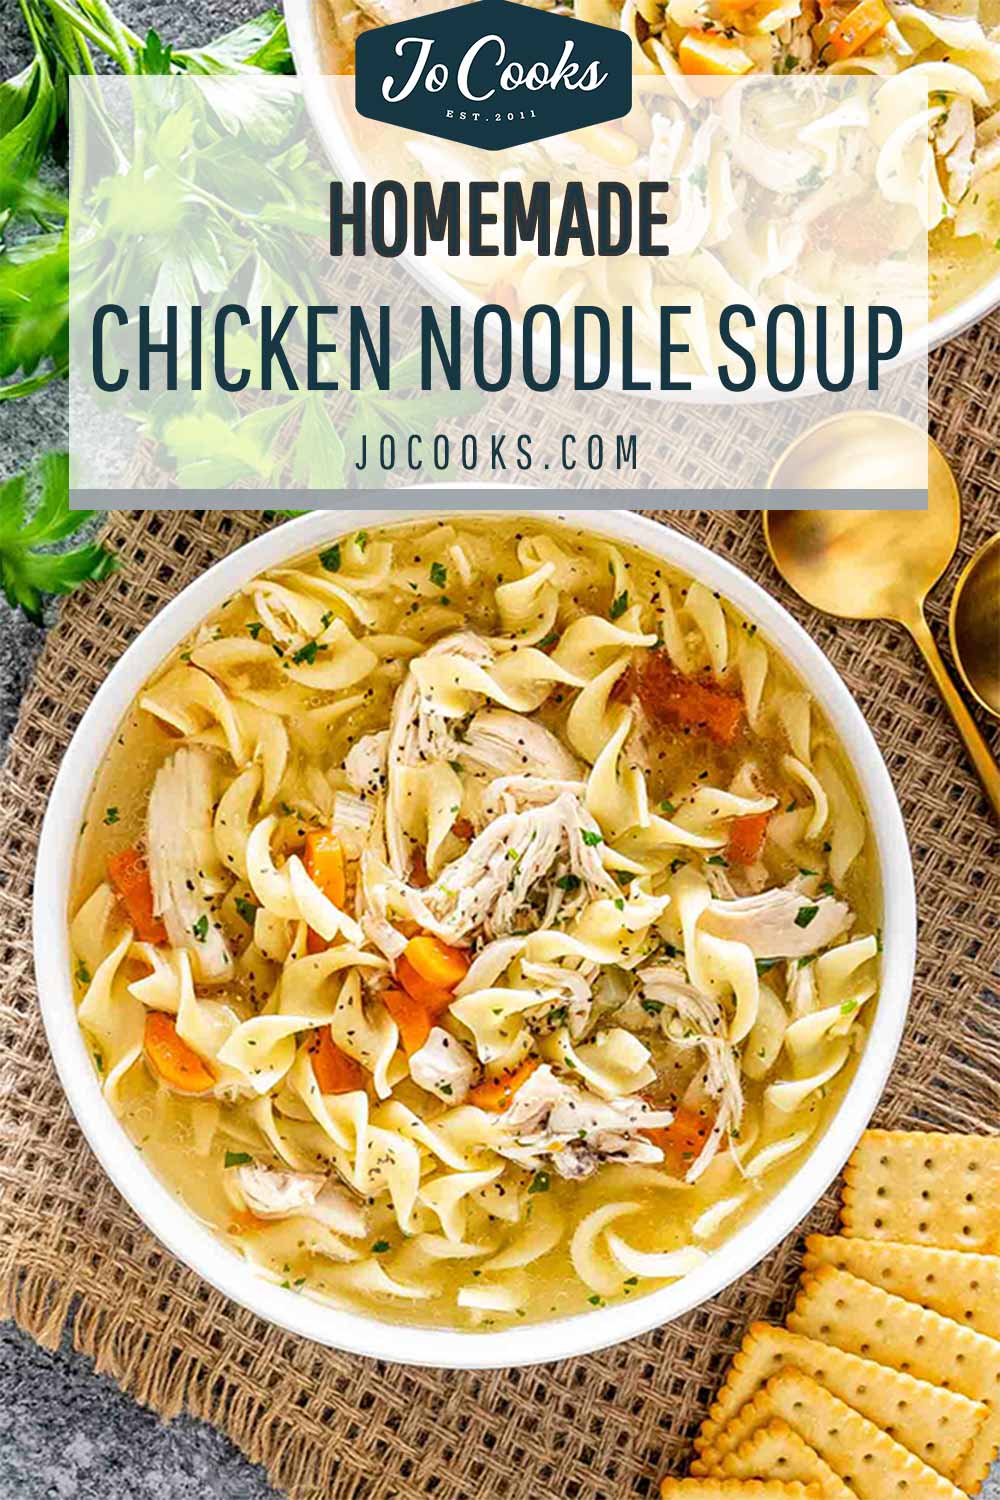 https://www.jocooks.com/wp-content/uploads/2019/09/chicken-noodle-soup.jpg